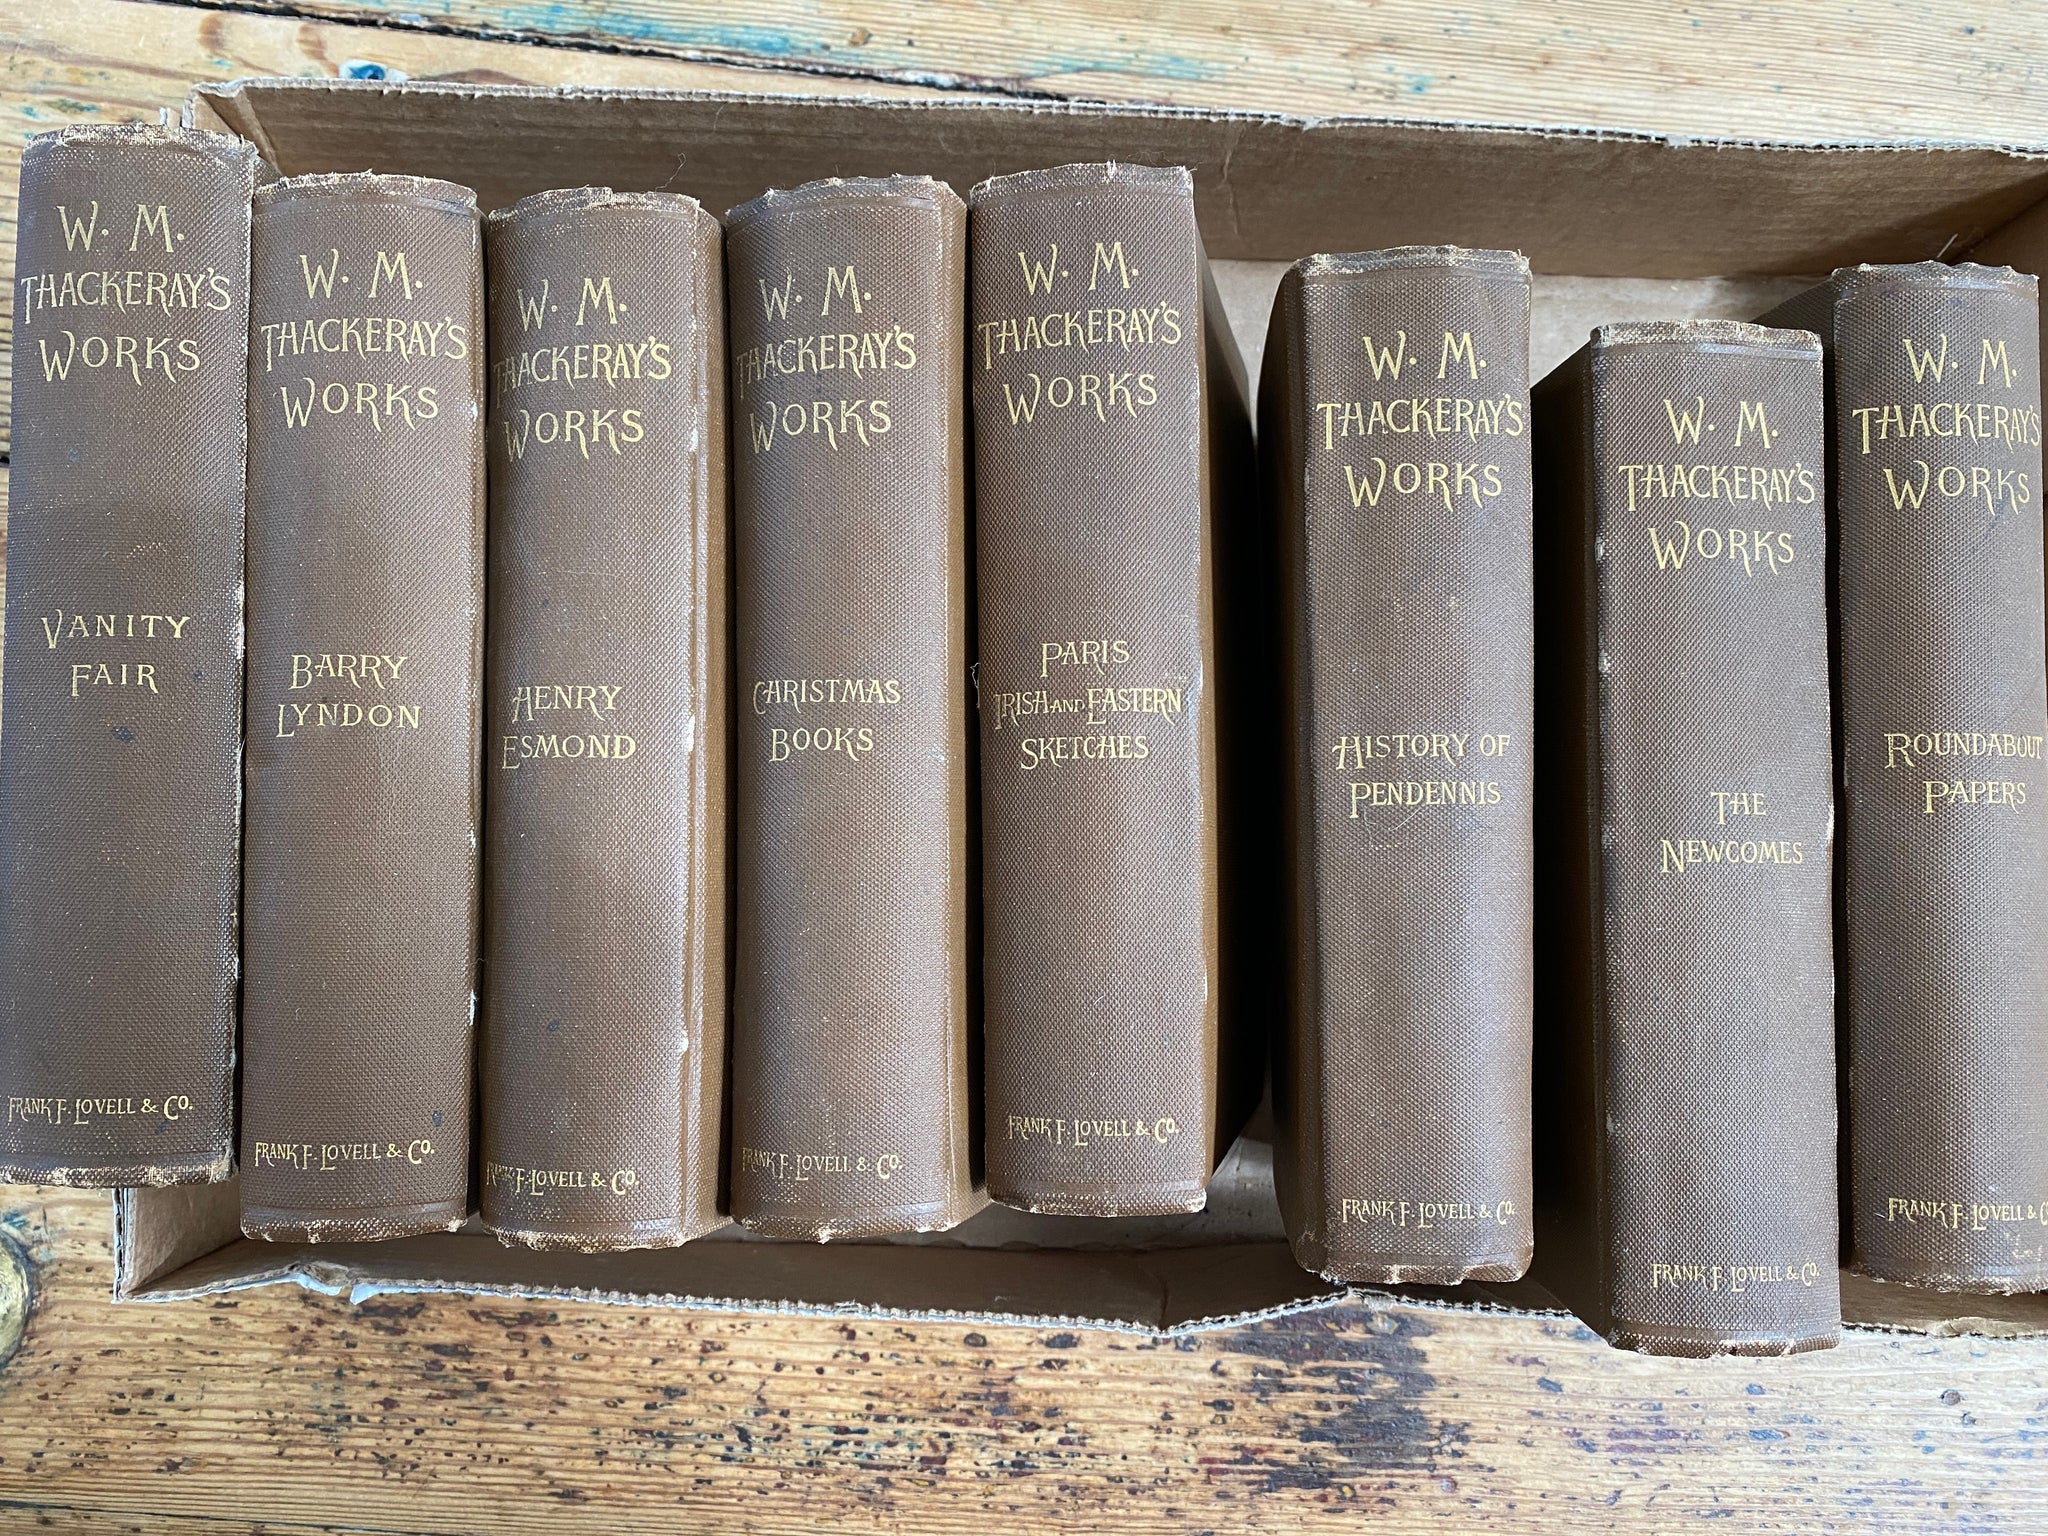 W.M. Thackeray Thackeray's Works lot of 8 Books